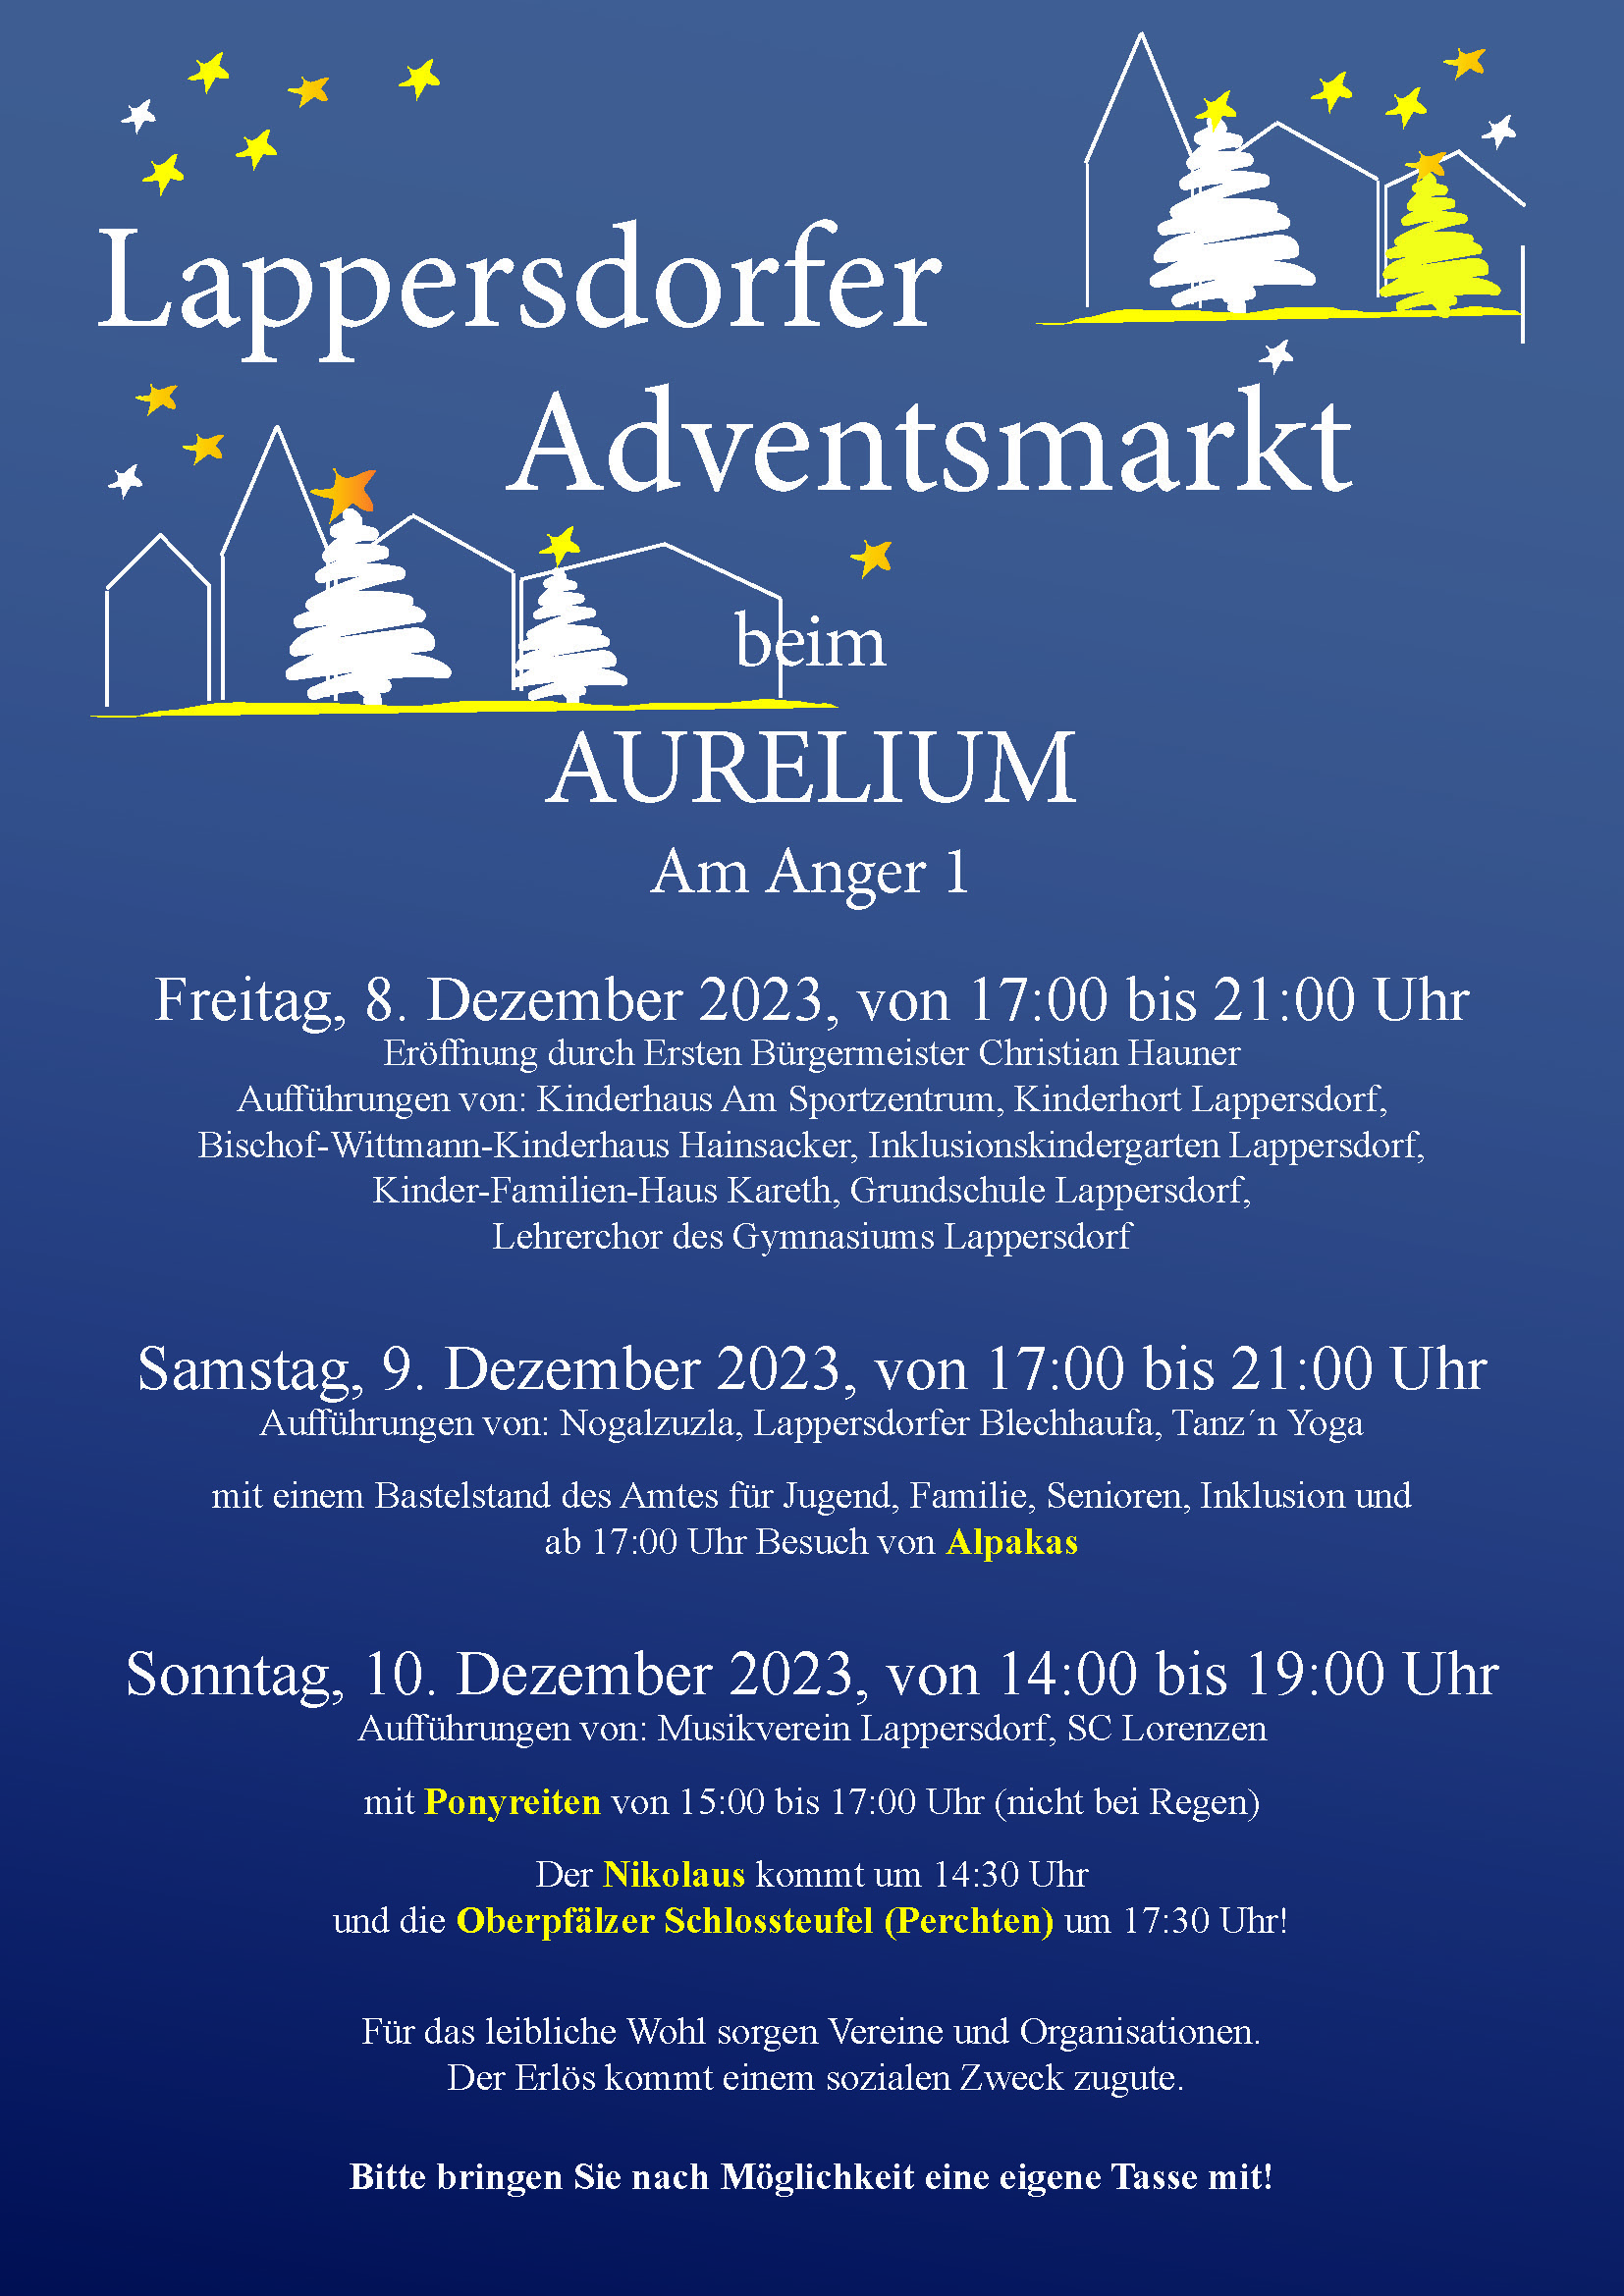 Lappersdorfer Adventsmarkt - Programm